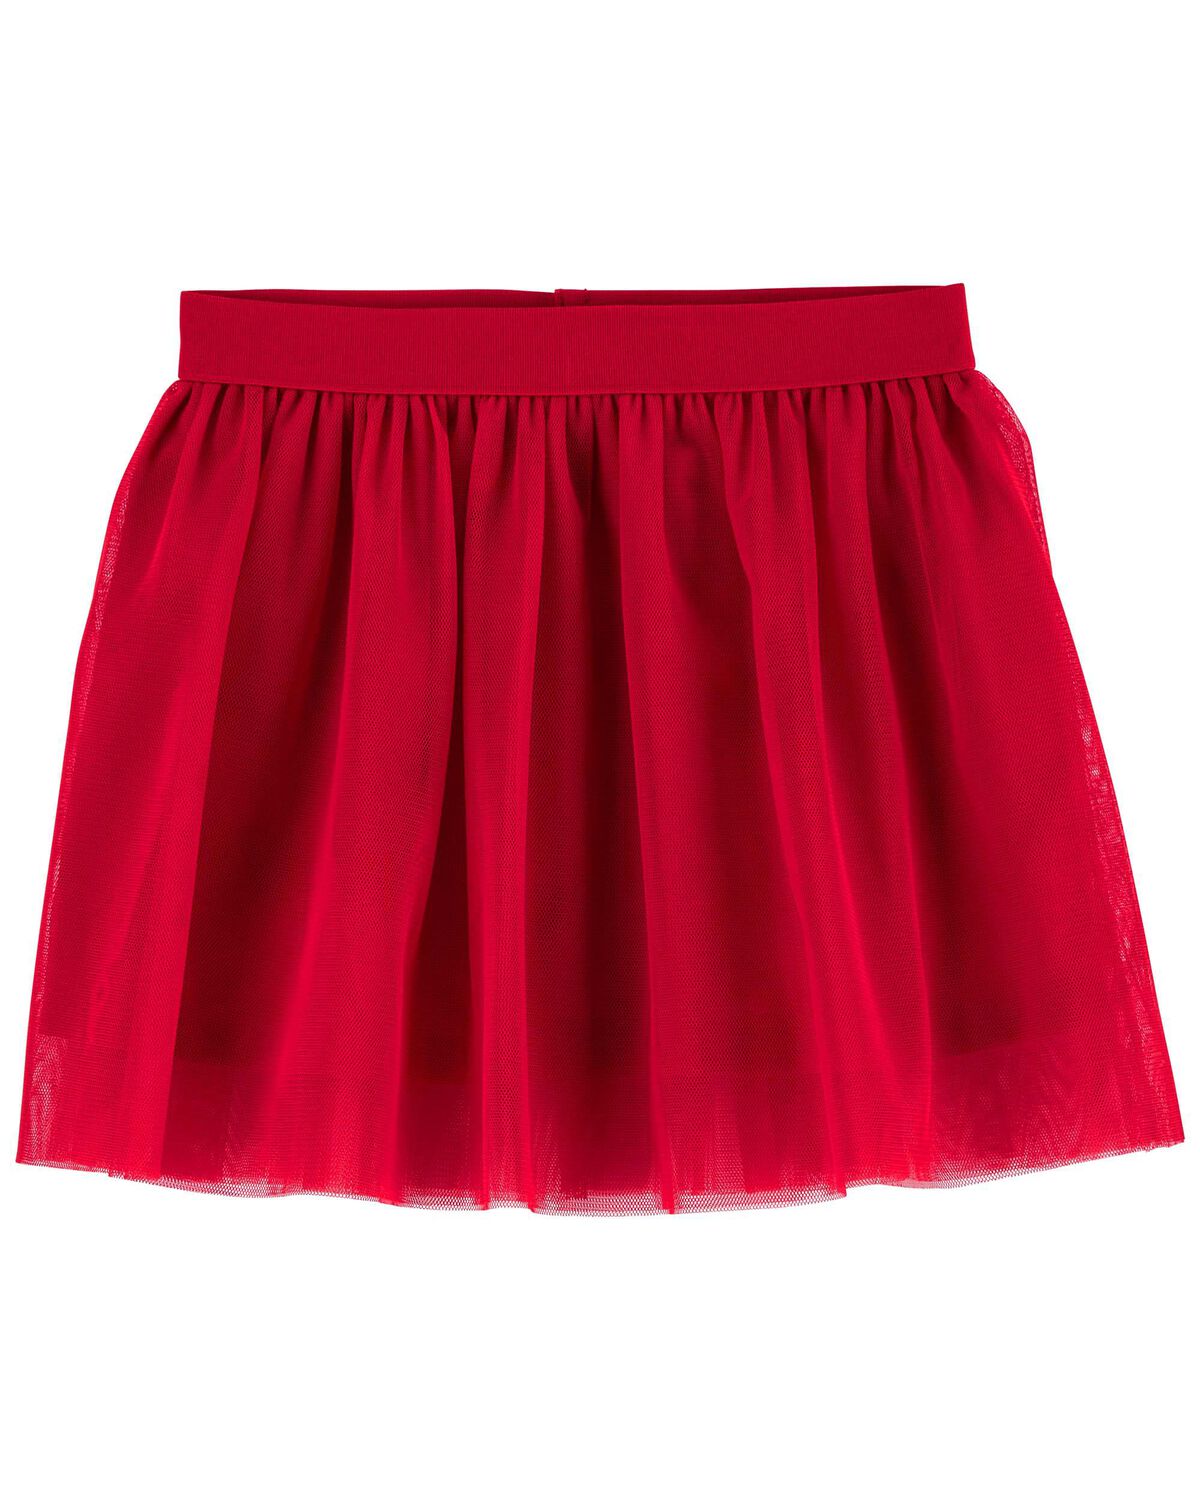 Red Toddler Tulle Tutu Skirt | carters.com